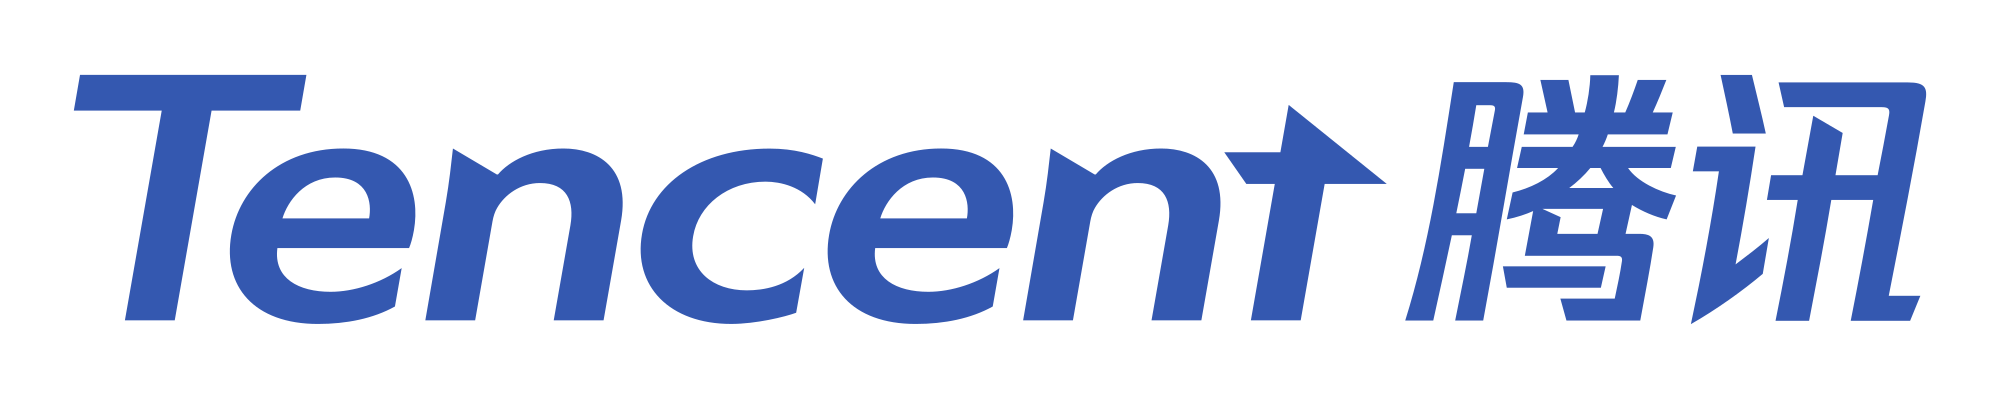 Tecent Logo - Tencent Logo.svg